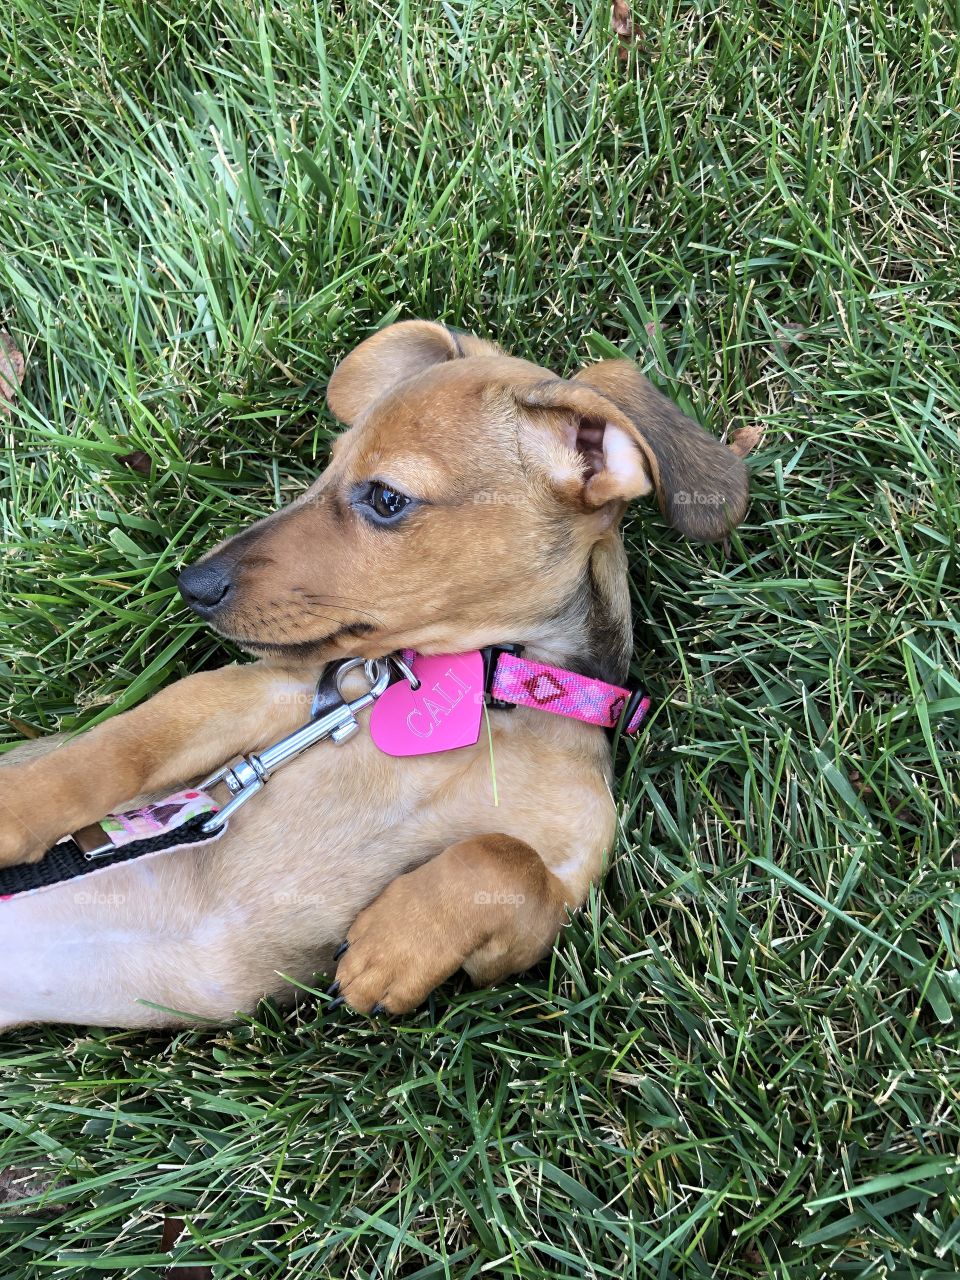 Dachshund puppy playing in grass